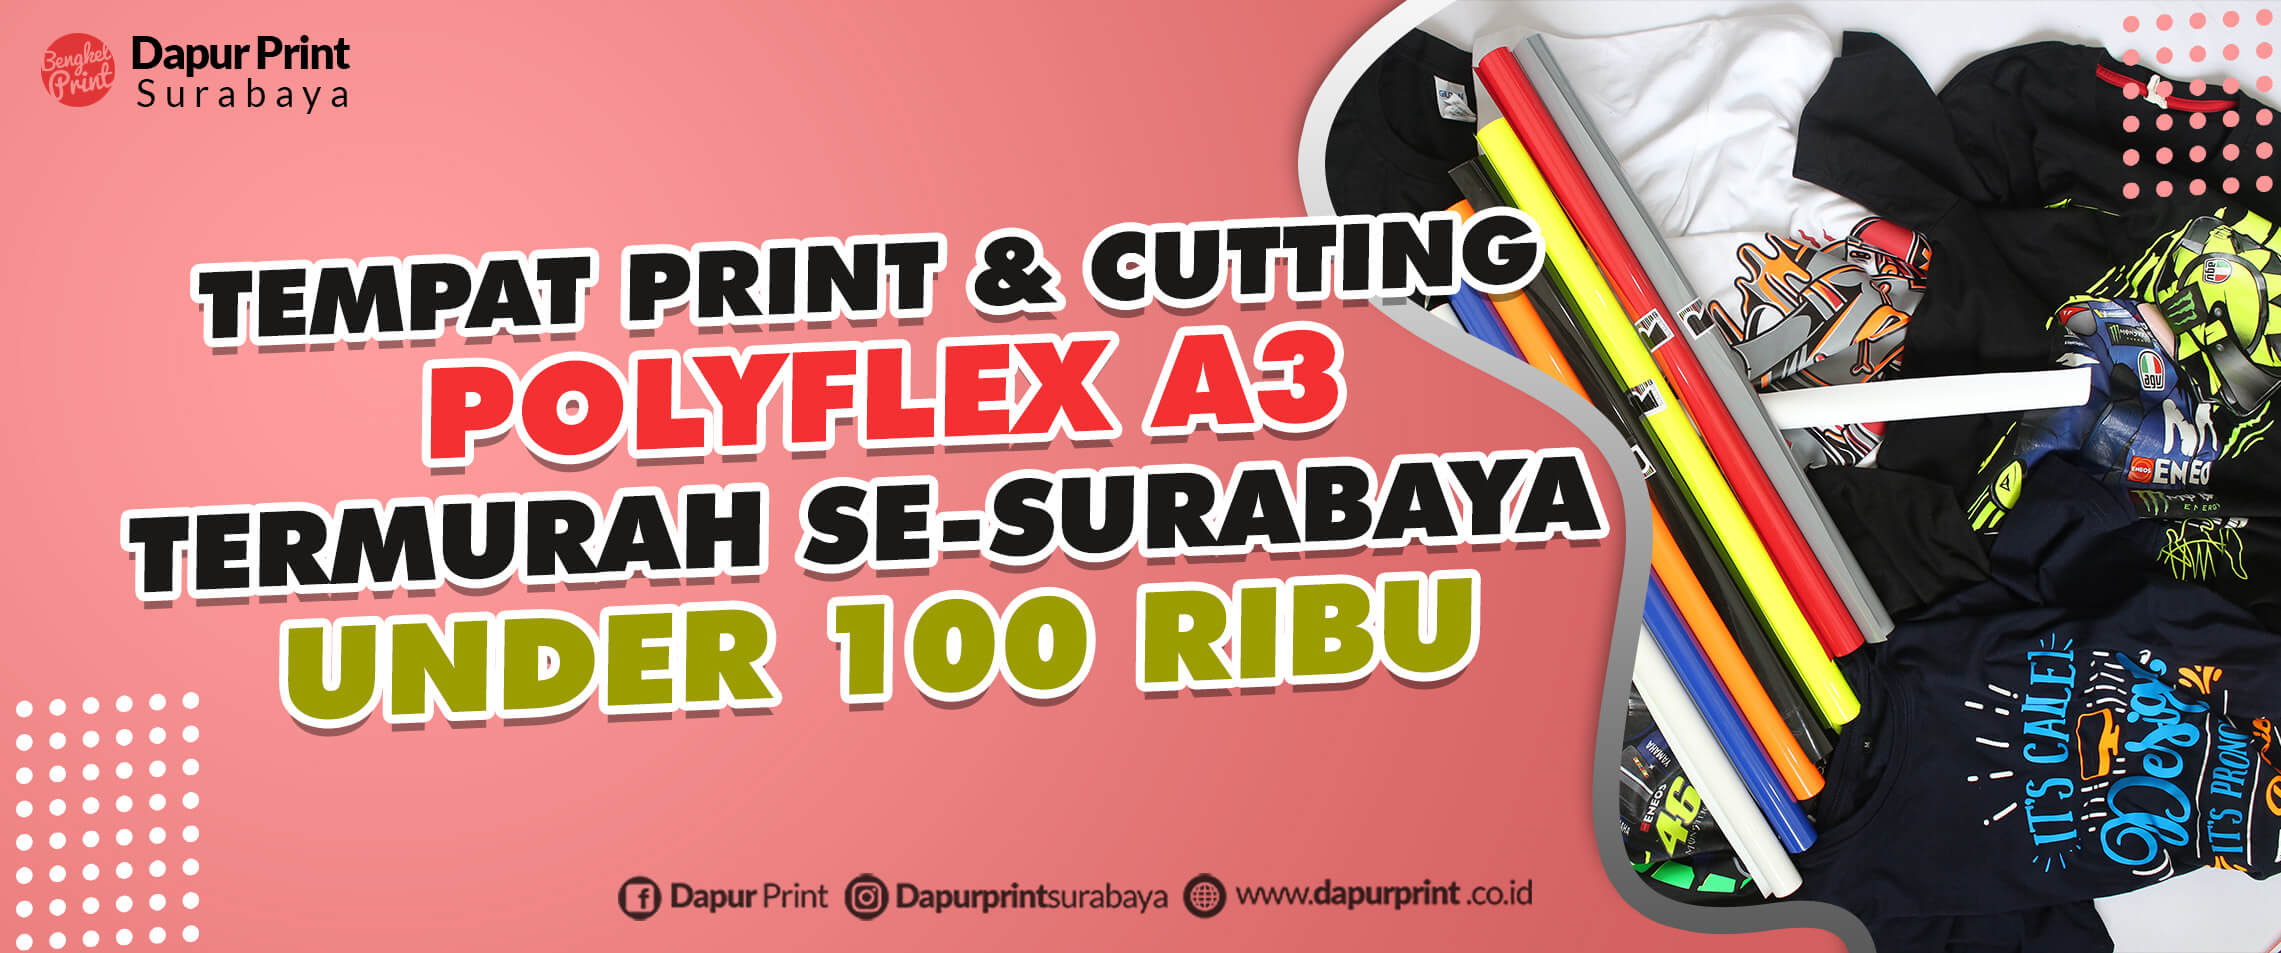 Jasa Print Dan Cutting Polyflex A3 Murah 2021